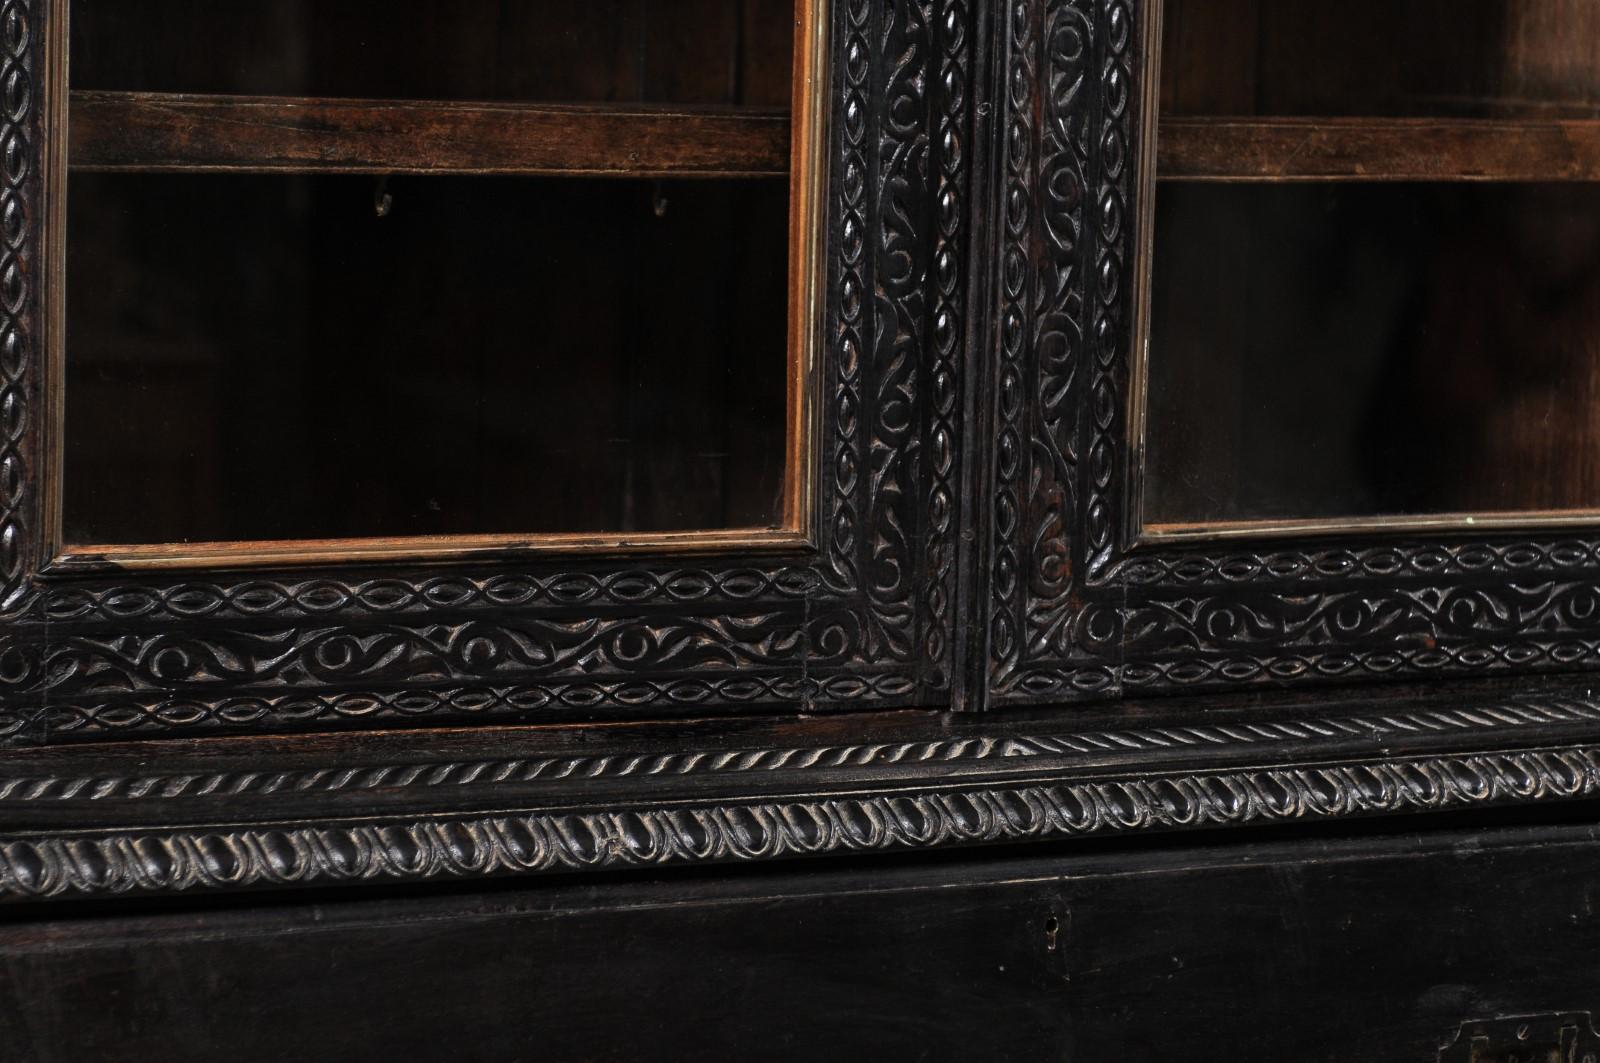 Glass Fabulous Antique British Colonial Butler's Desk 'With Secret Compartments'